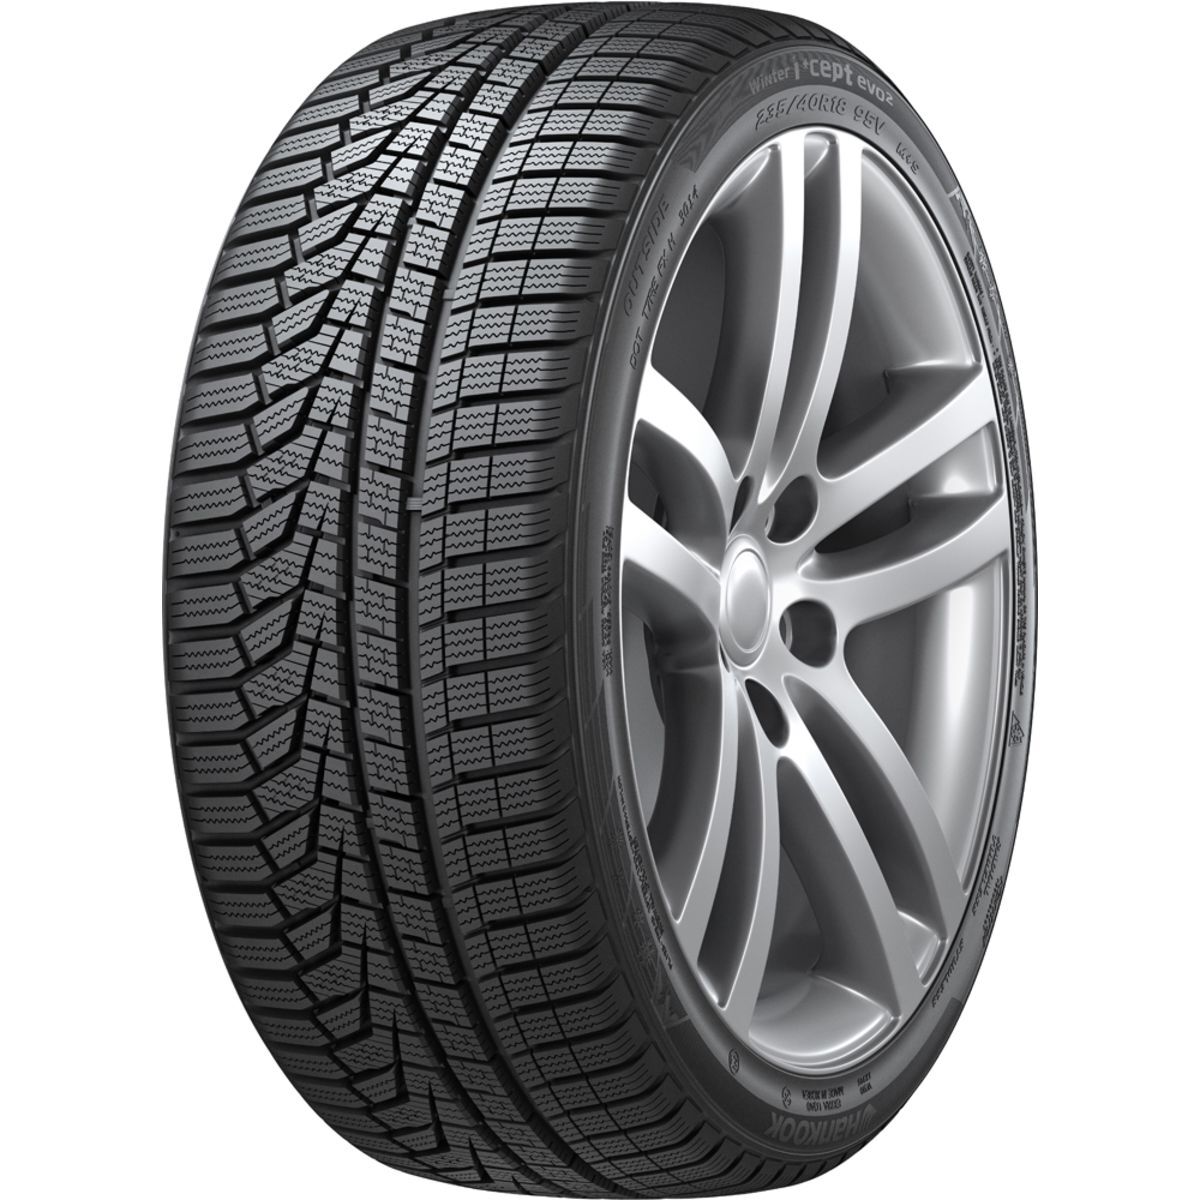 Neumáticos de invierno HANKOOK Winter i*cept evo2 W320B 225/50R17 94V